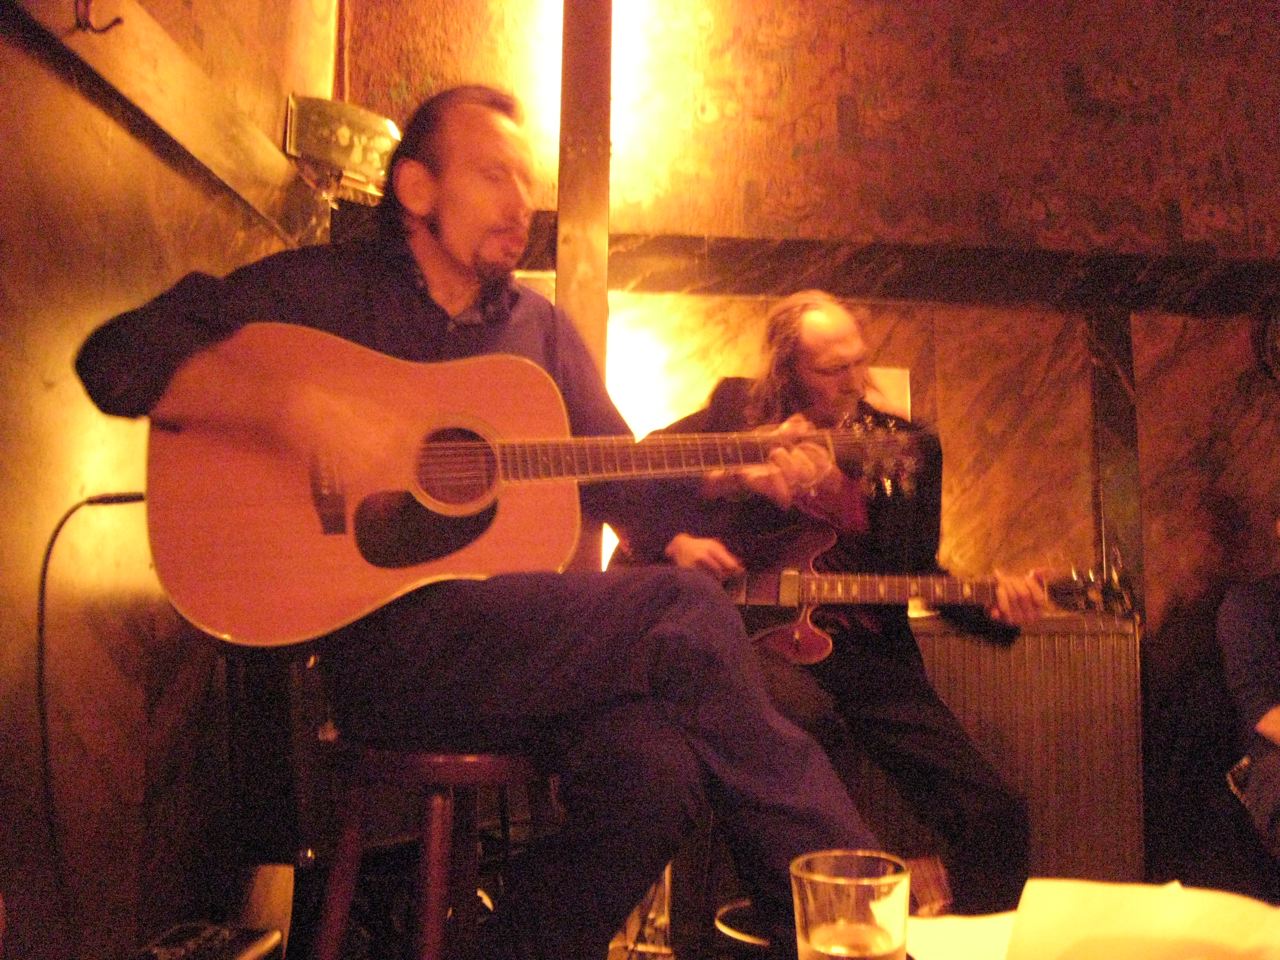 Adams & Shoenfelt @ Café Kreuzberg, Berlin, 27.10.2007, photo by David Marutschke